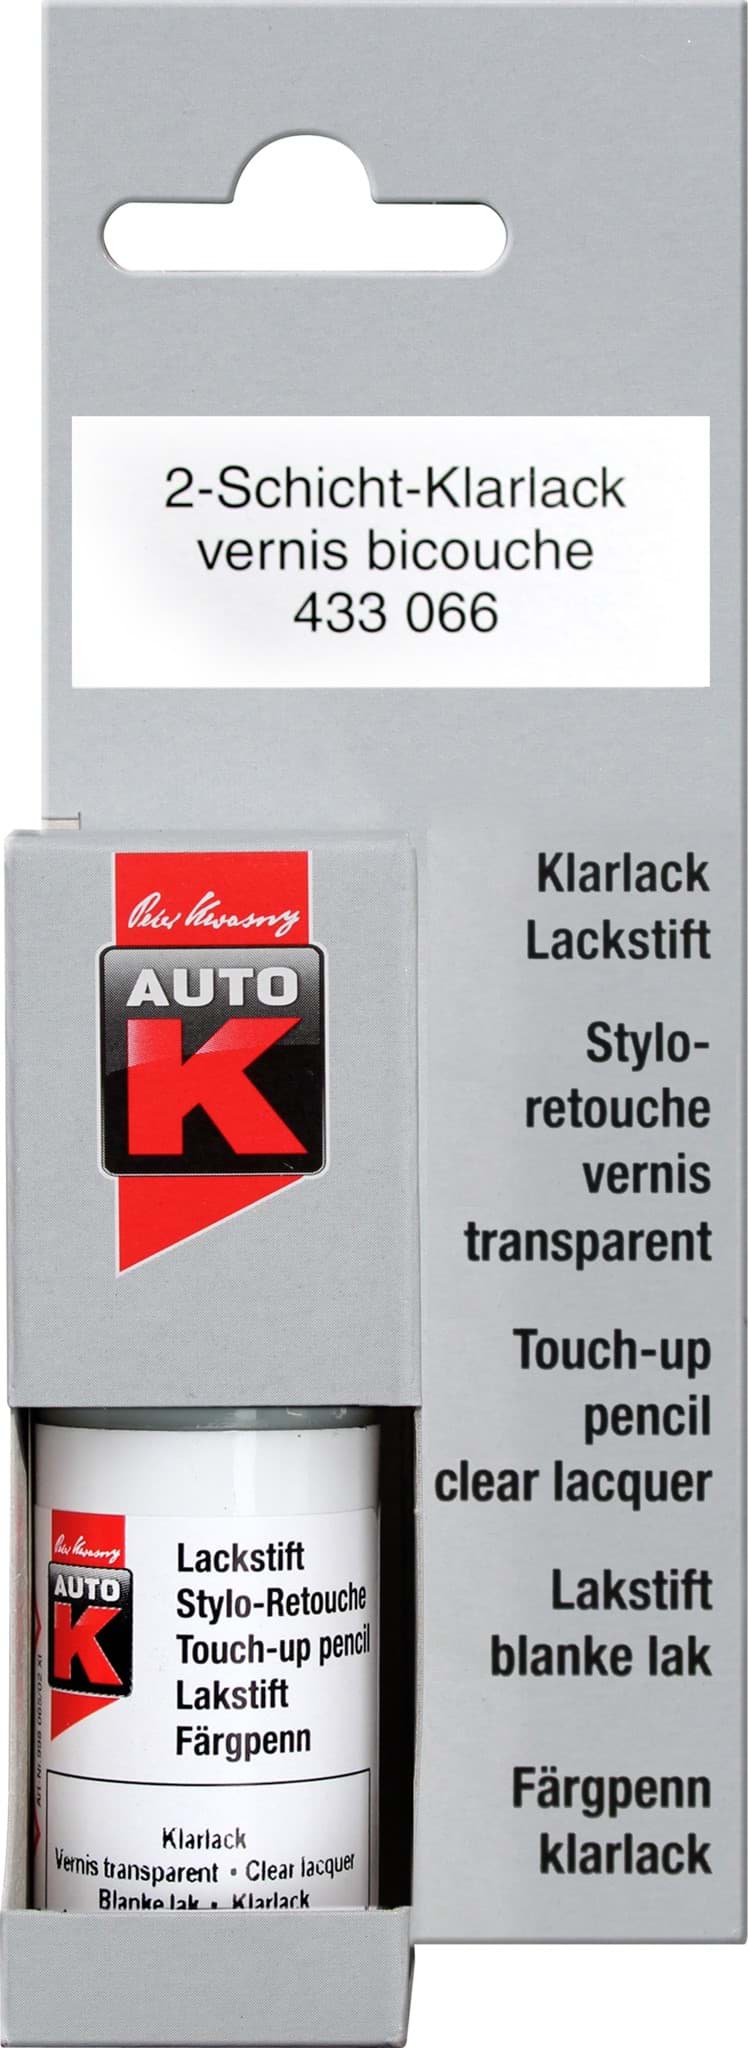 Afbeelding van AutoK Lackstift Tupflack 2-Schicht-Klarlack 433066